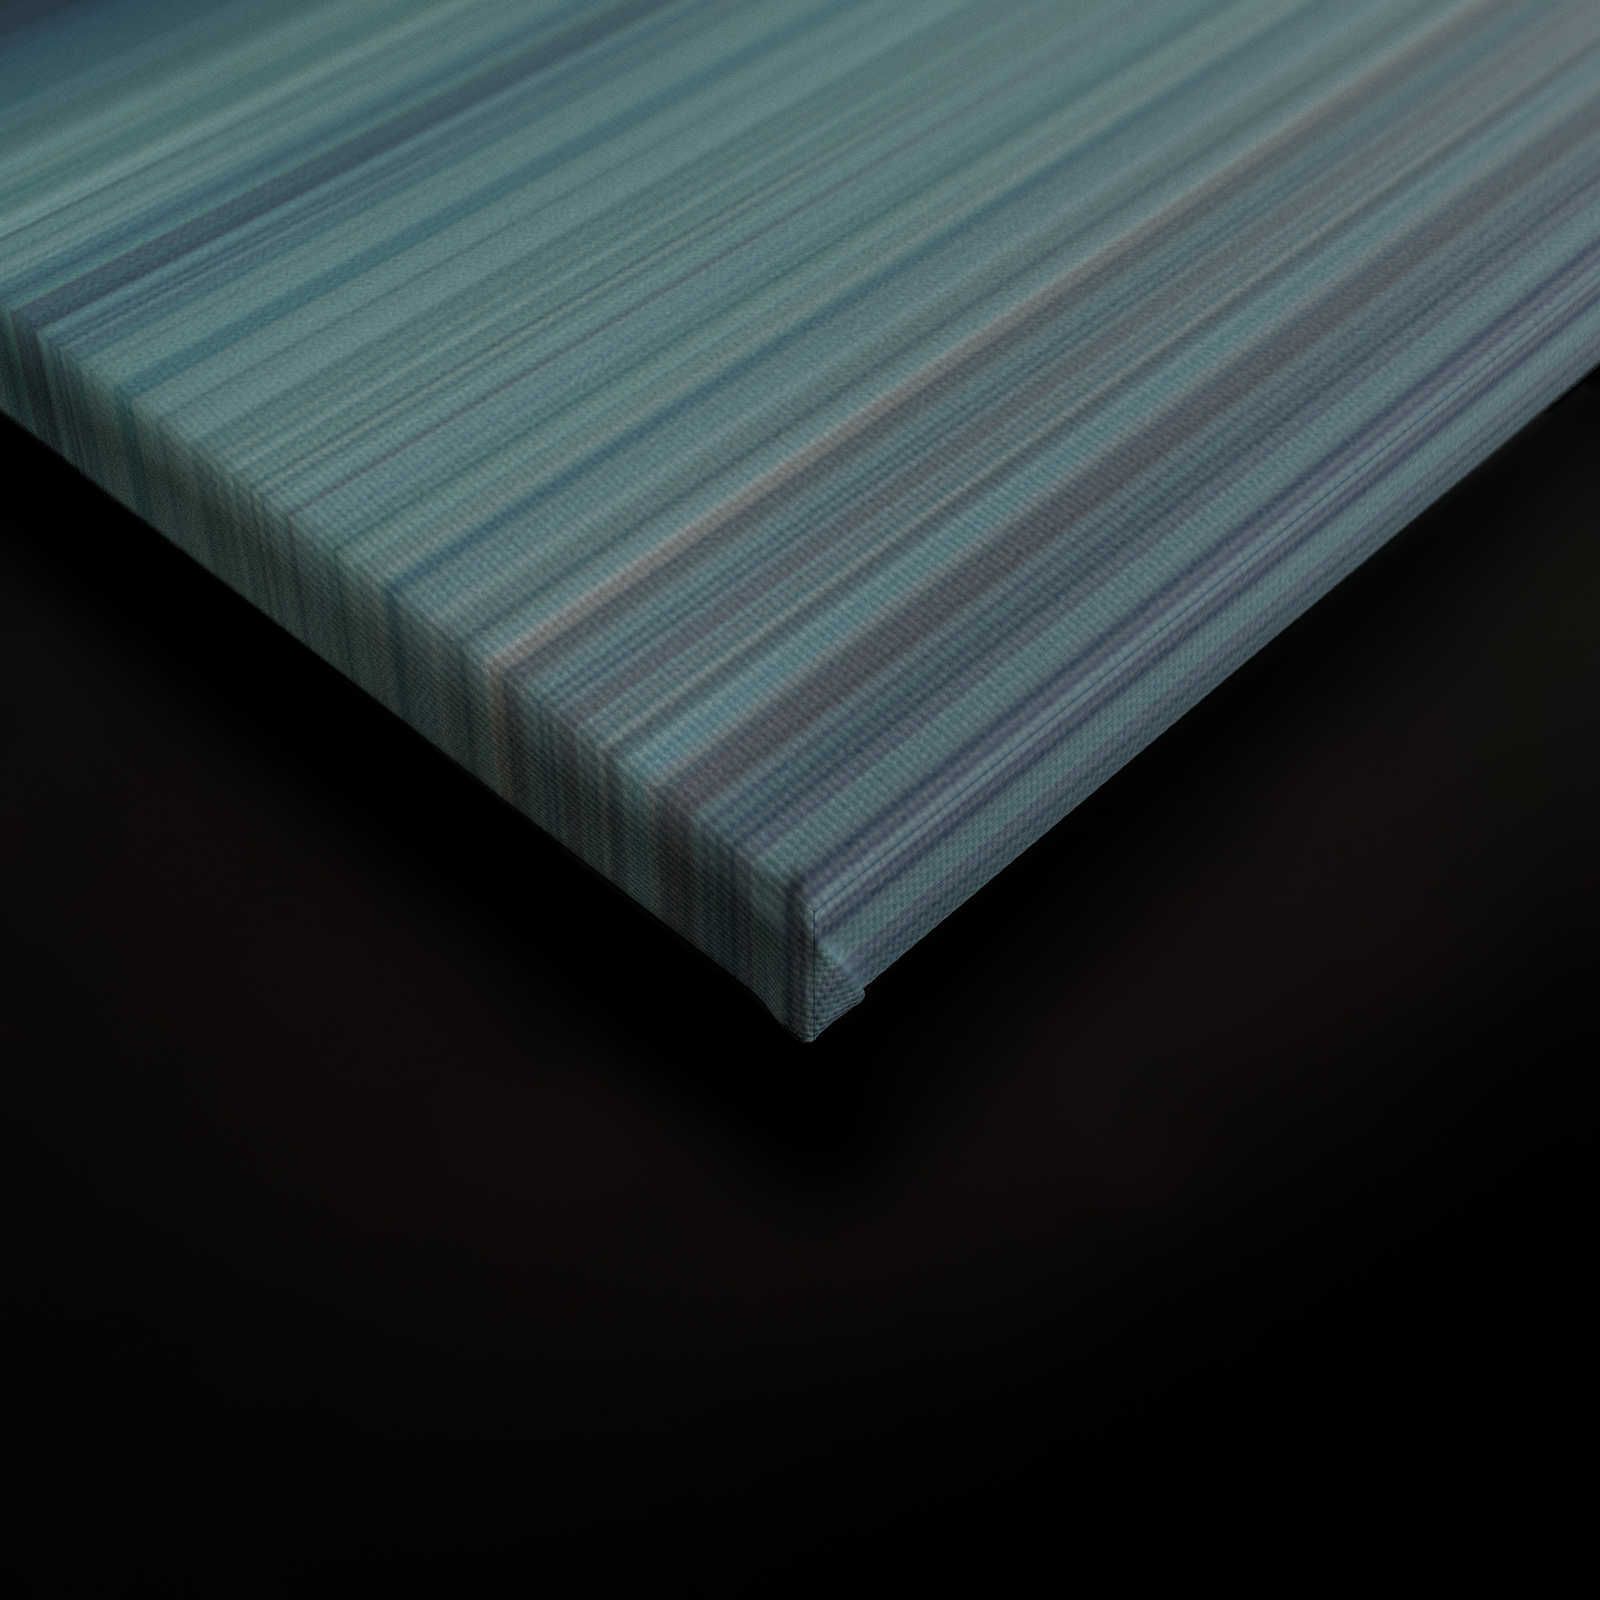             Horizonte 1 - Lienzo paisaje abstracto en azul - 0,90 m x 0,60 m
        